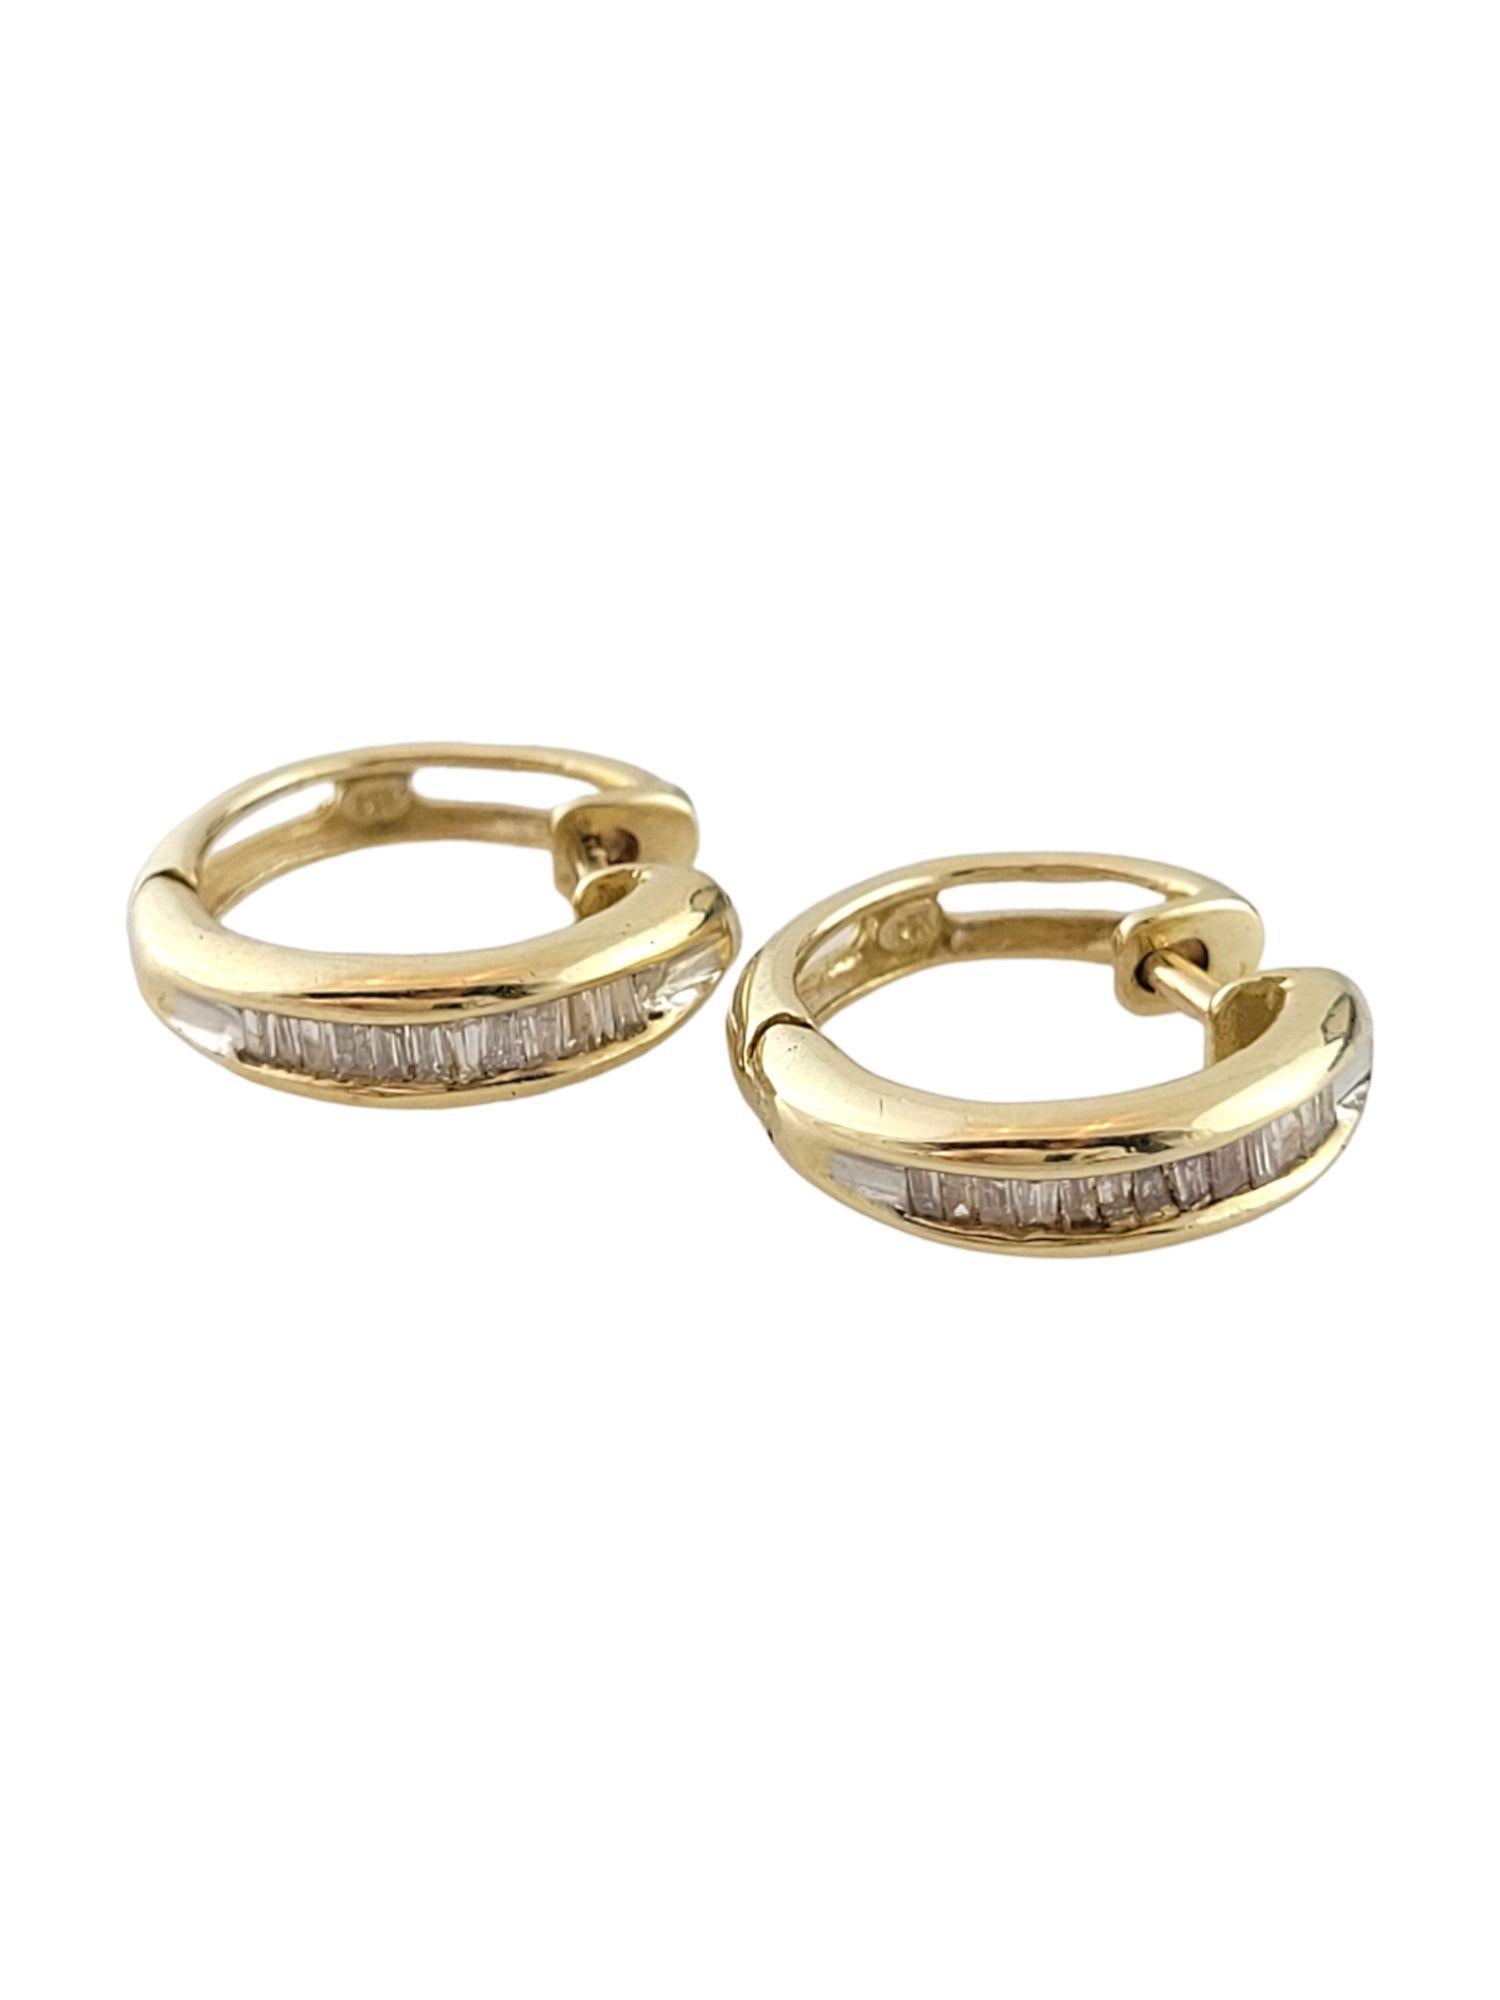 Baguette Cut 14K Yellow Gold Diamond Huggies Earrings #14807 For Sale